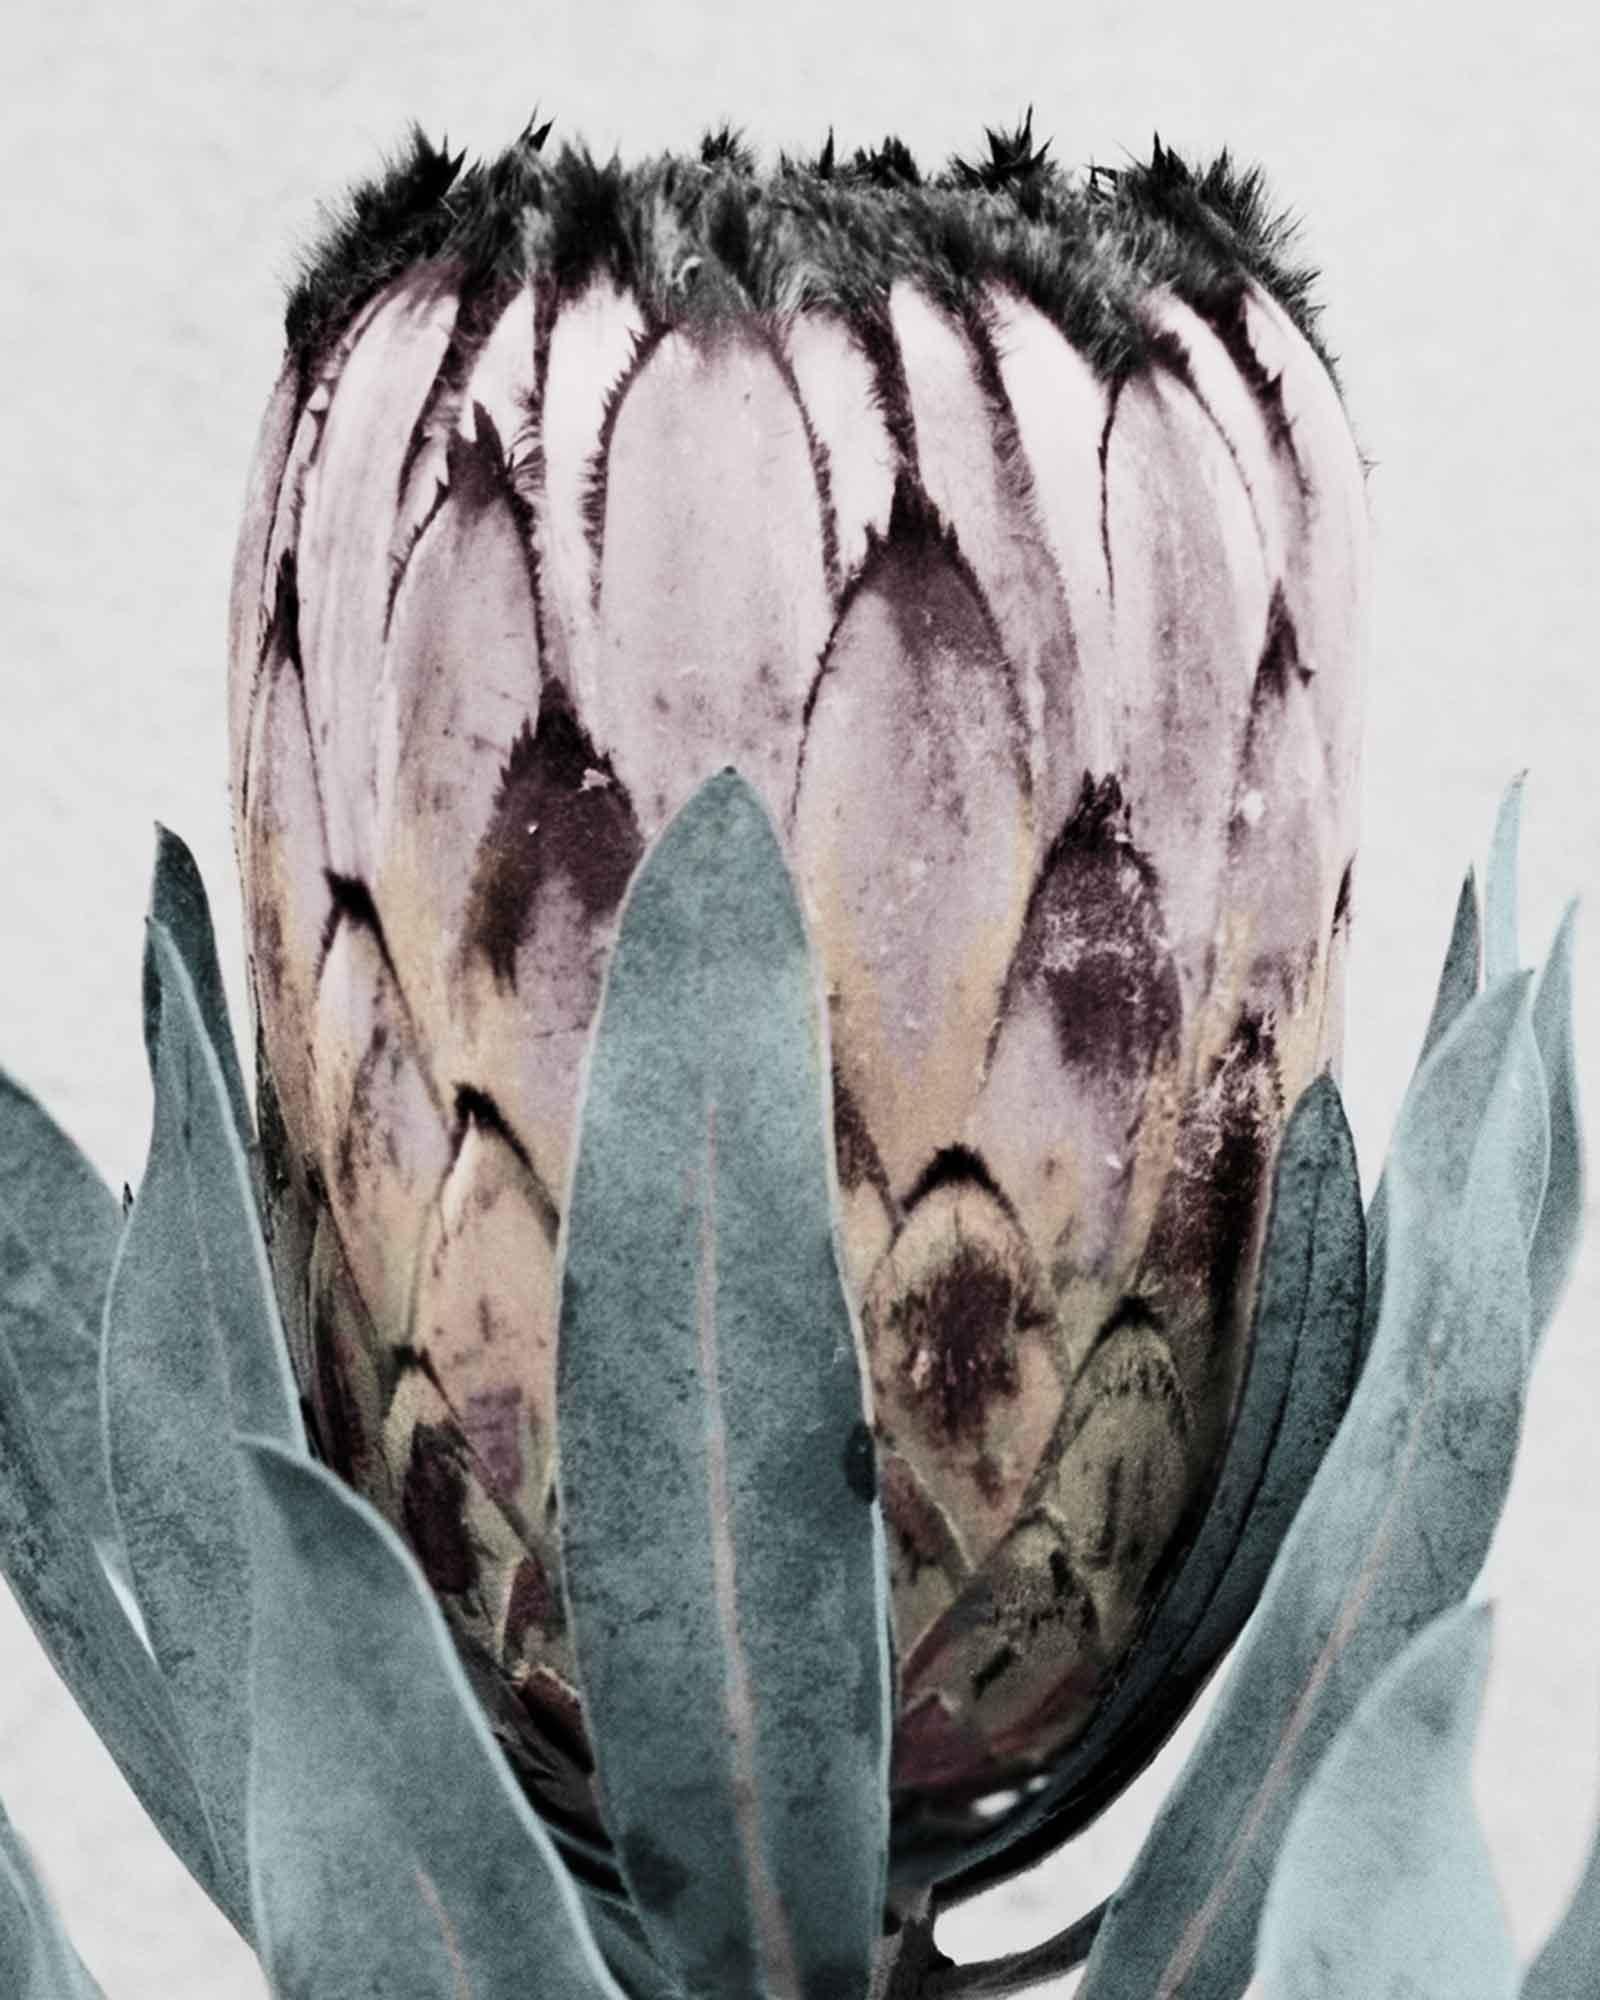 Botanica #17 (Protea Cynaroides) - Contemporain Photograph par Vee Speers